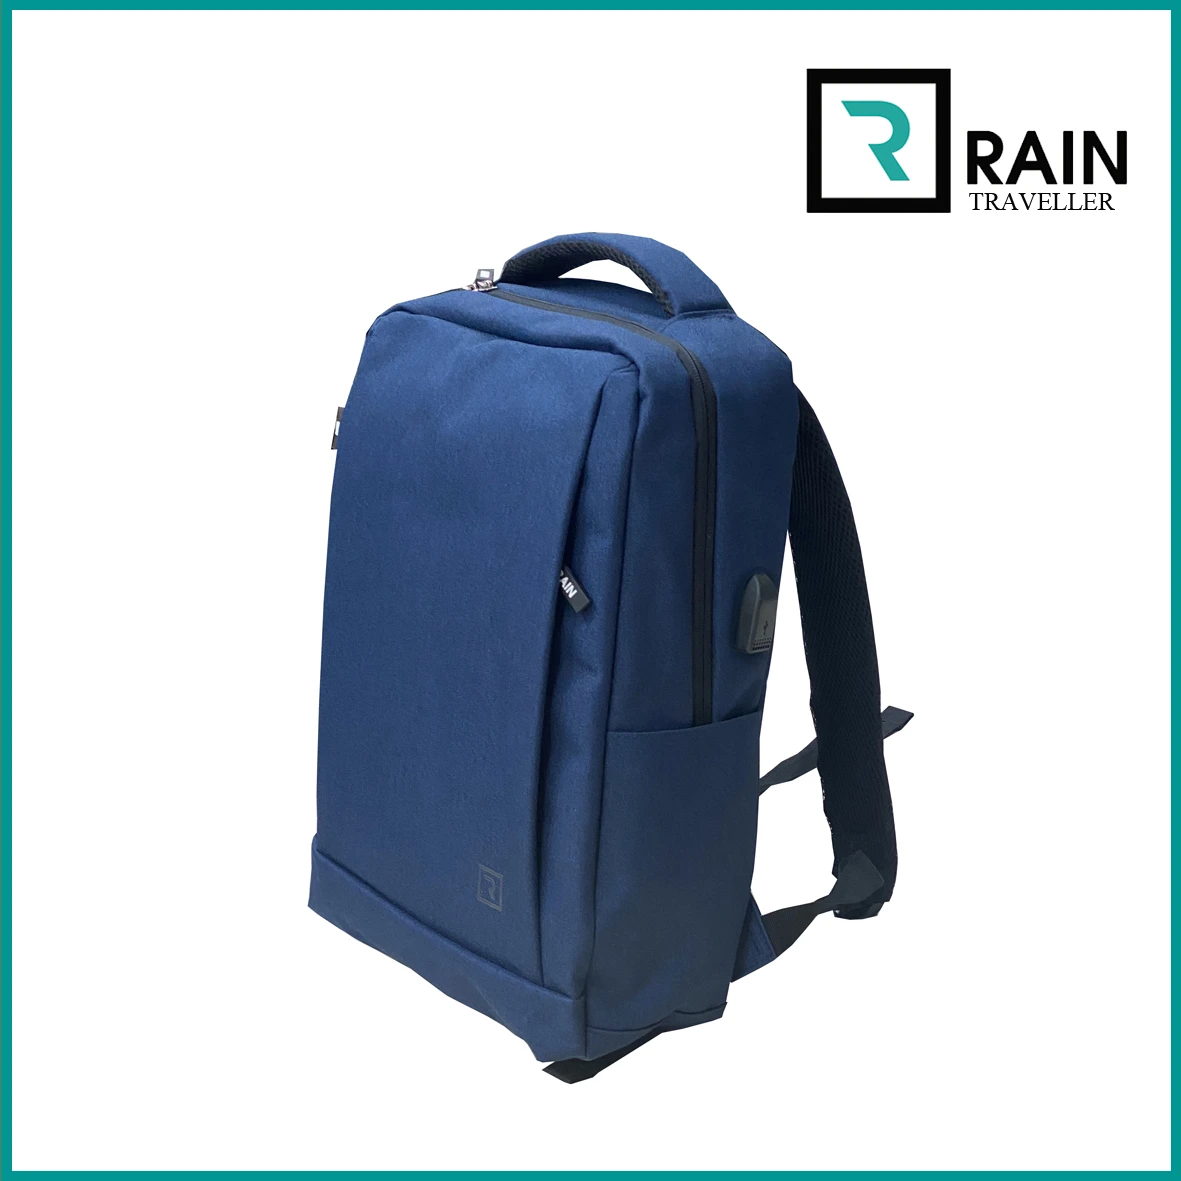 RBP1000-backpack-rain